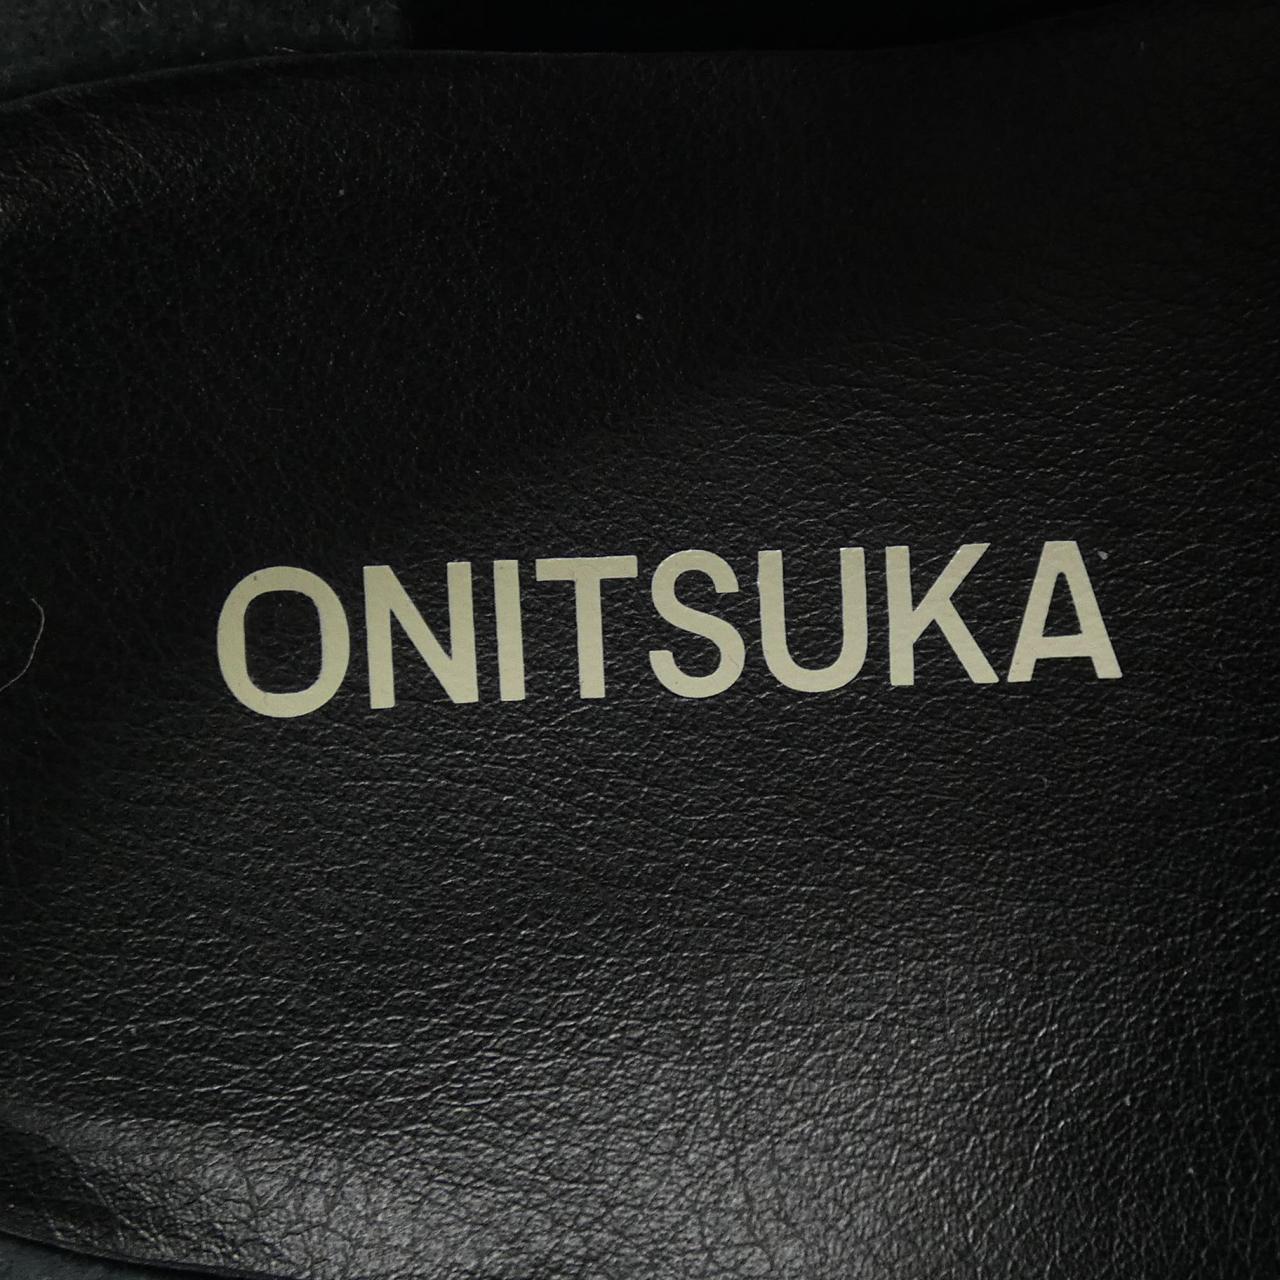 the onitsuka